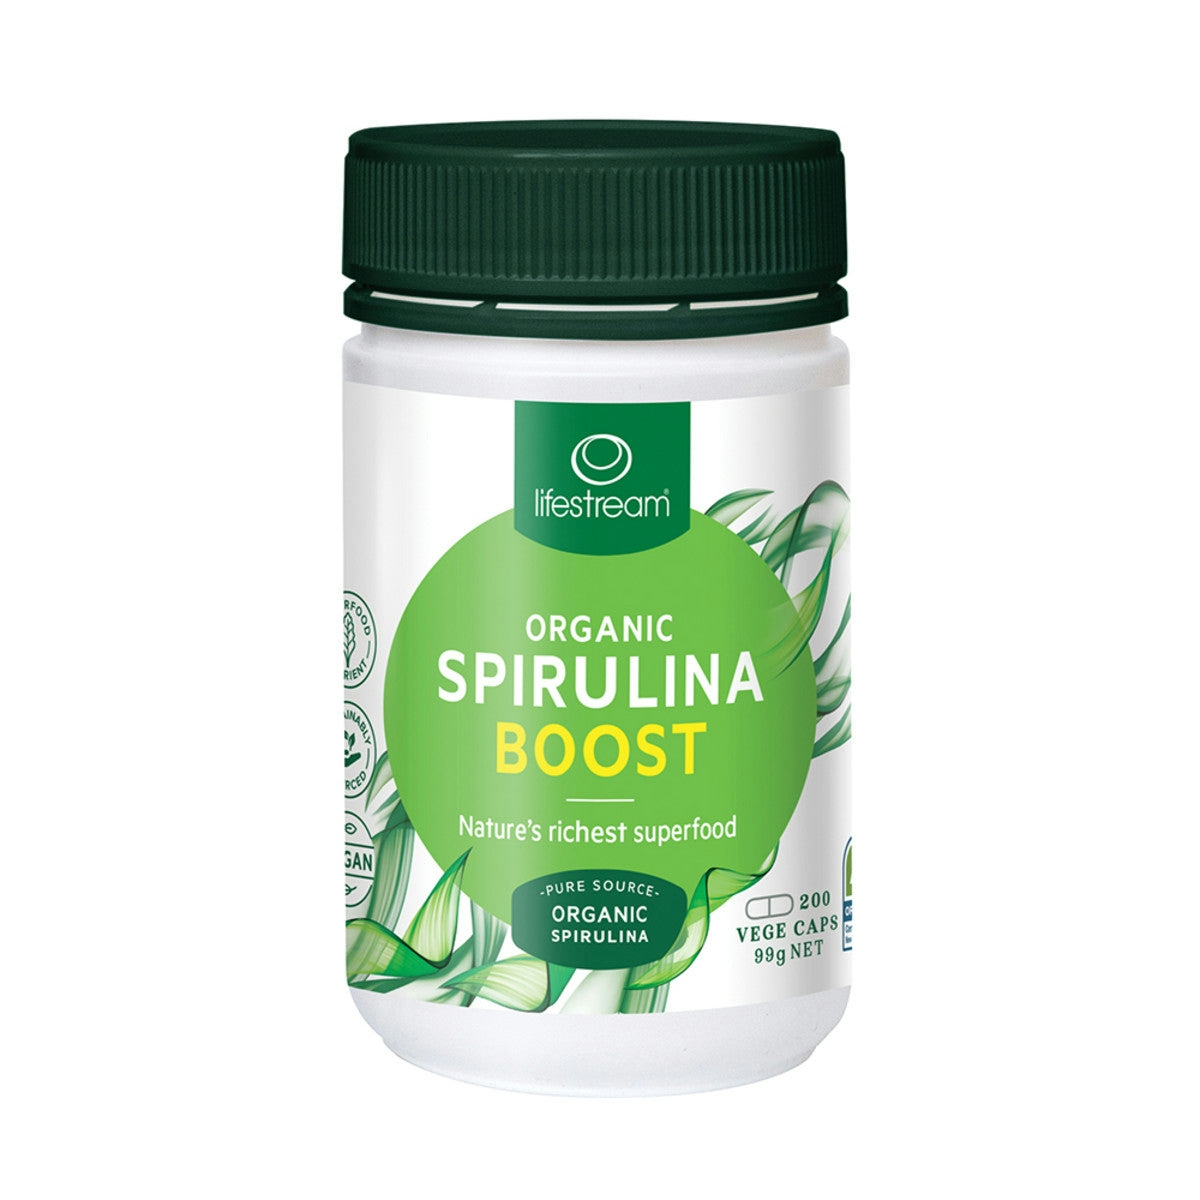 LifeStream Organic Spirulina Boost 200 Vege Caps